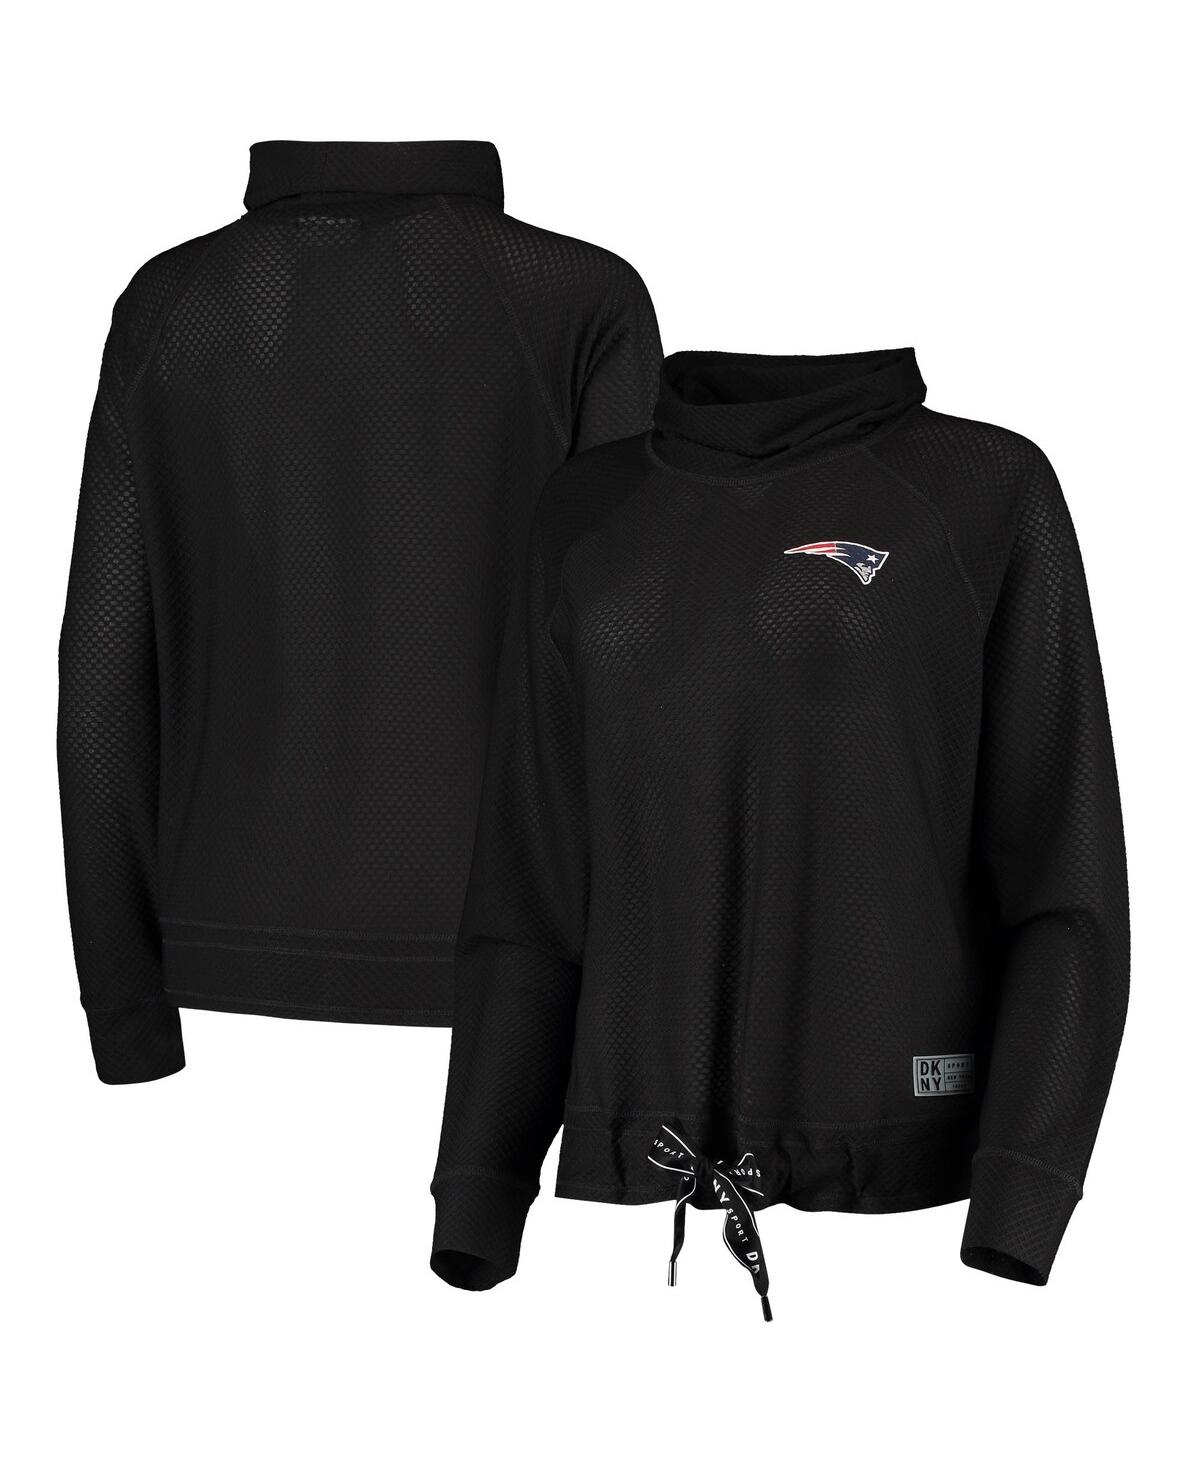 Shop Dkny Women's  Sport Black New England Patriots Gabby Cowl Neck Raglan Mesh Sweatshirt